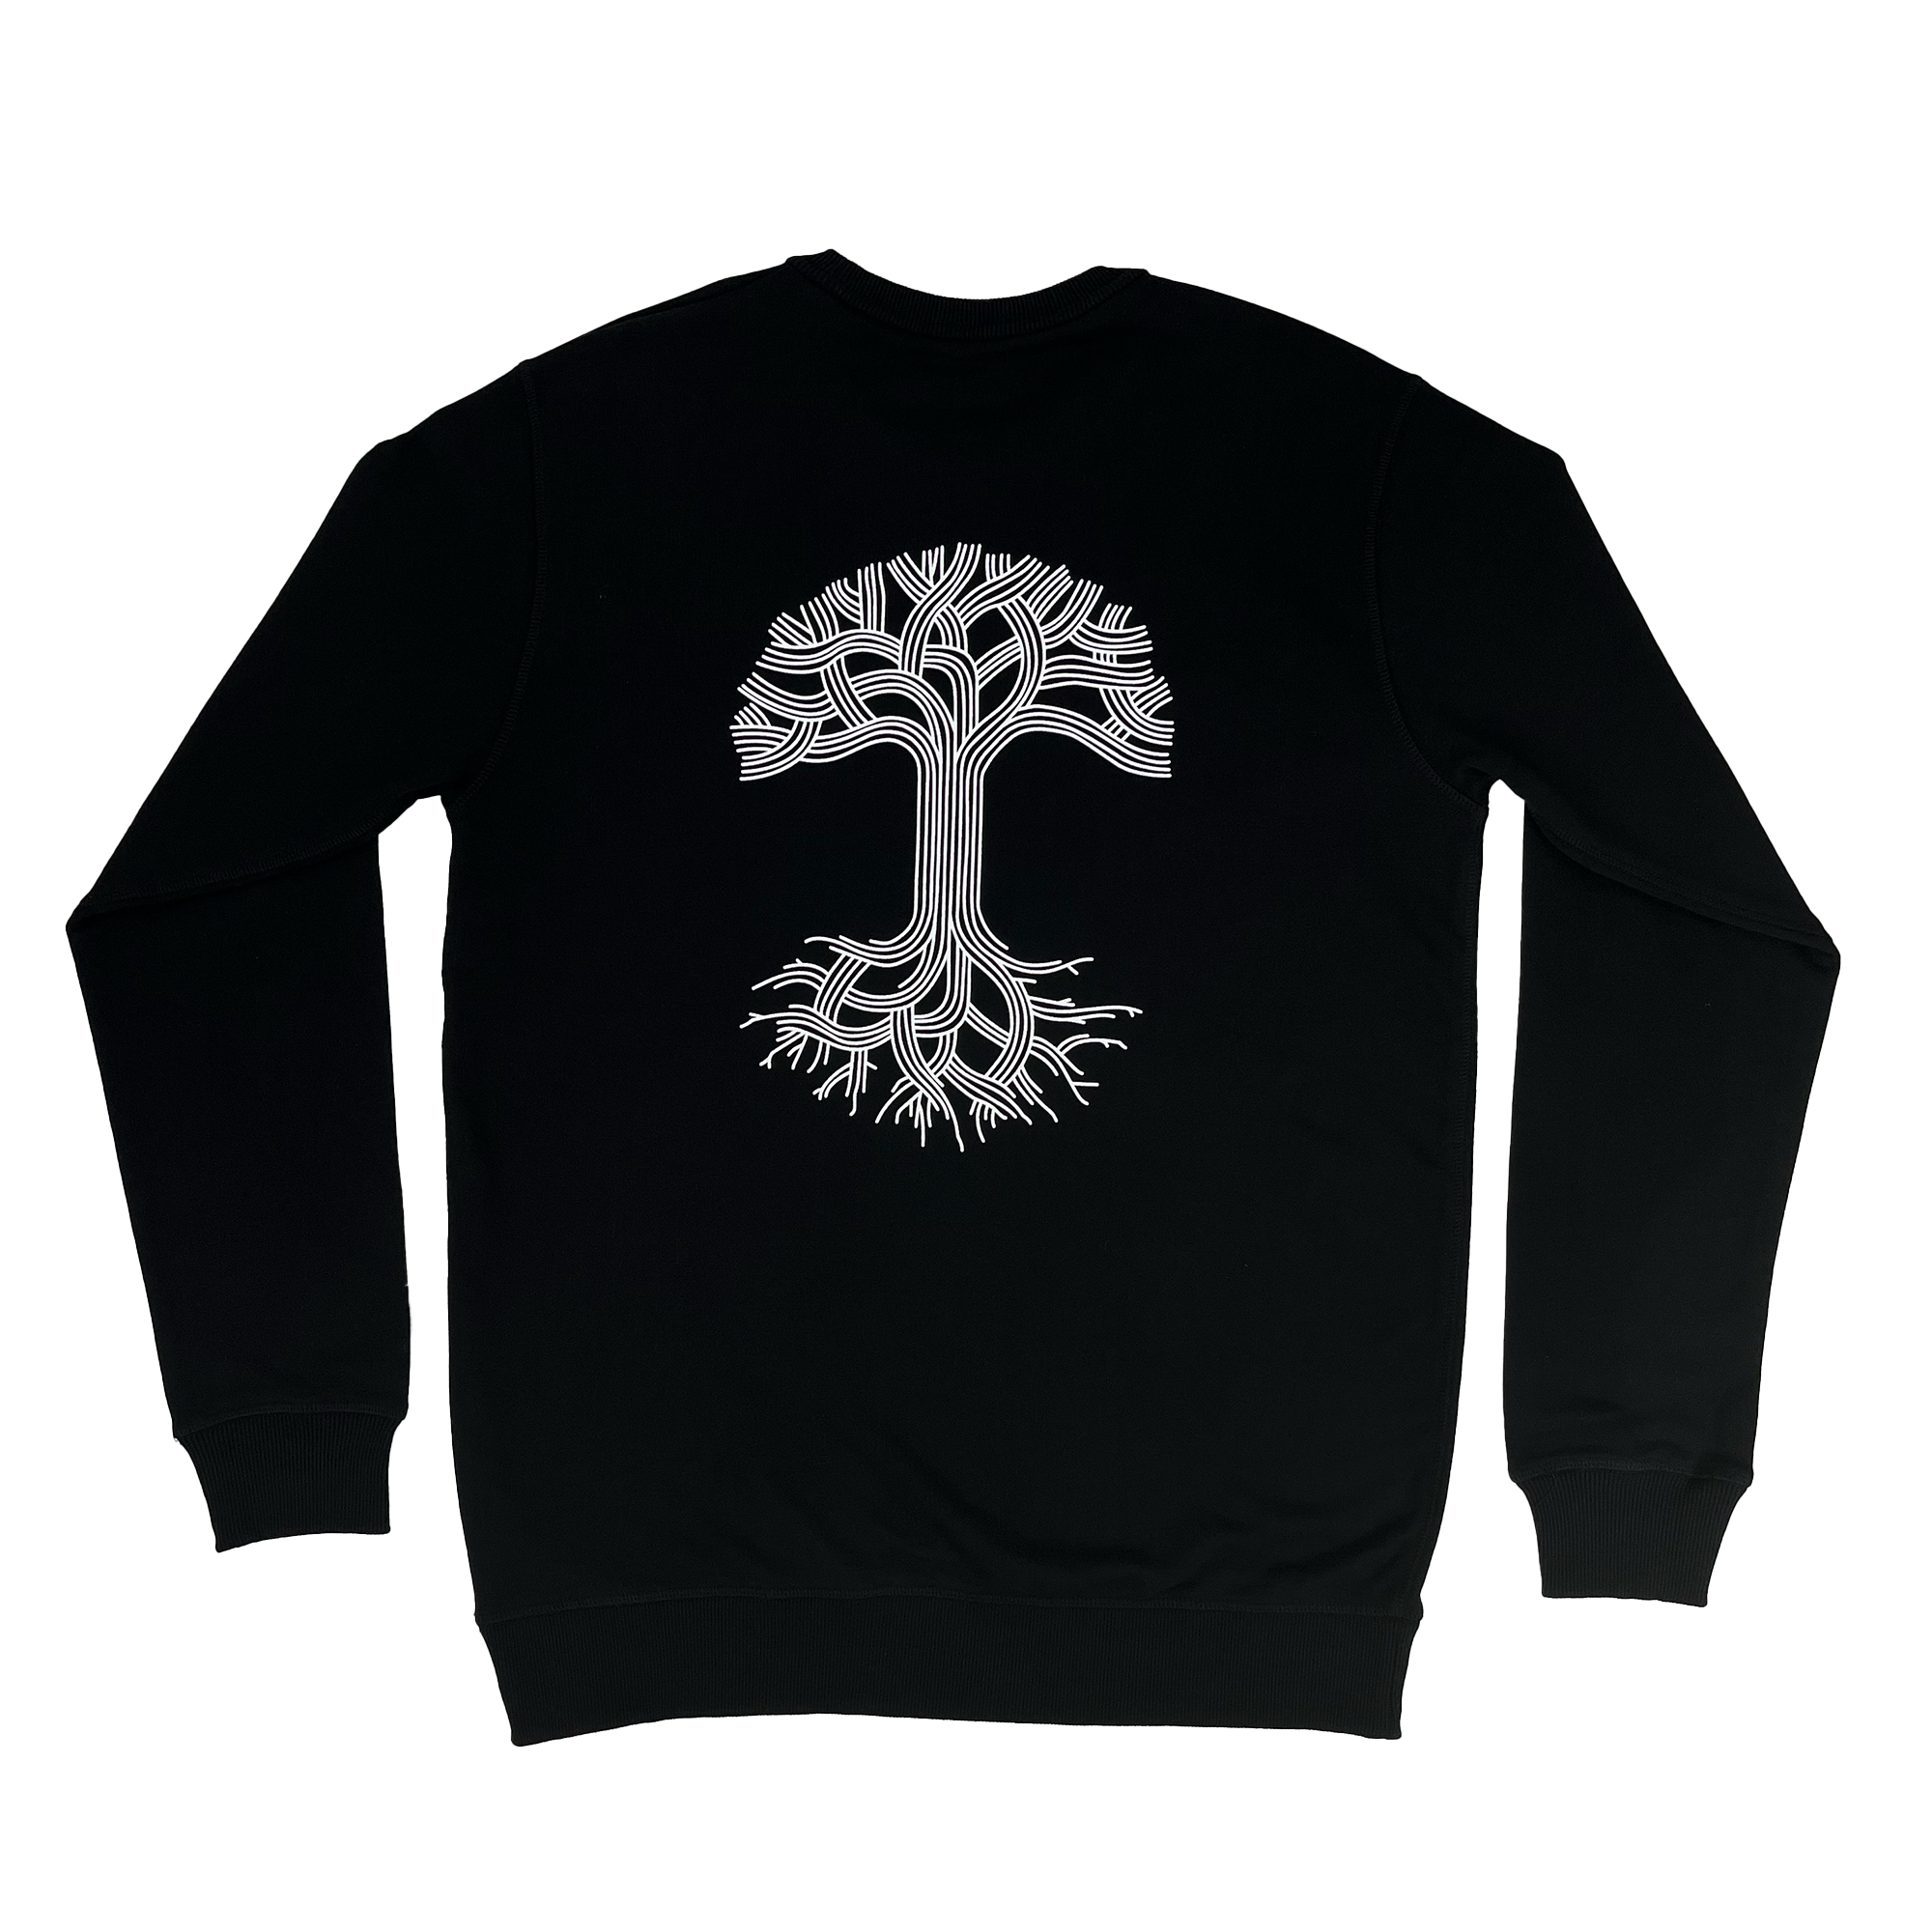 Back view of Premium crewneck sweatshirt - Oaklandish tree logo, Mineral